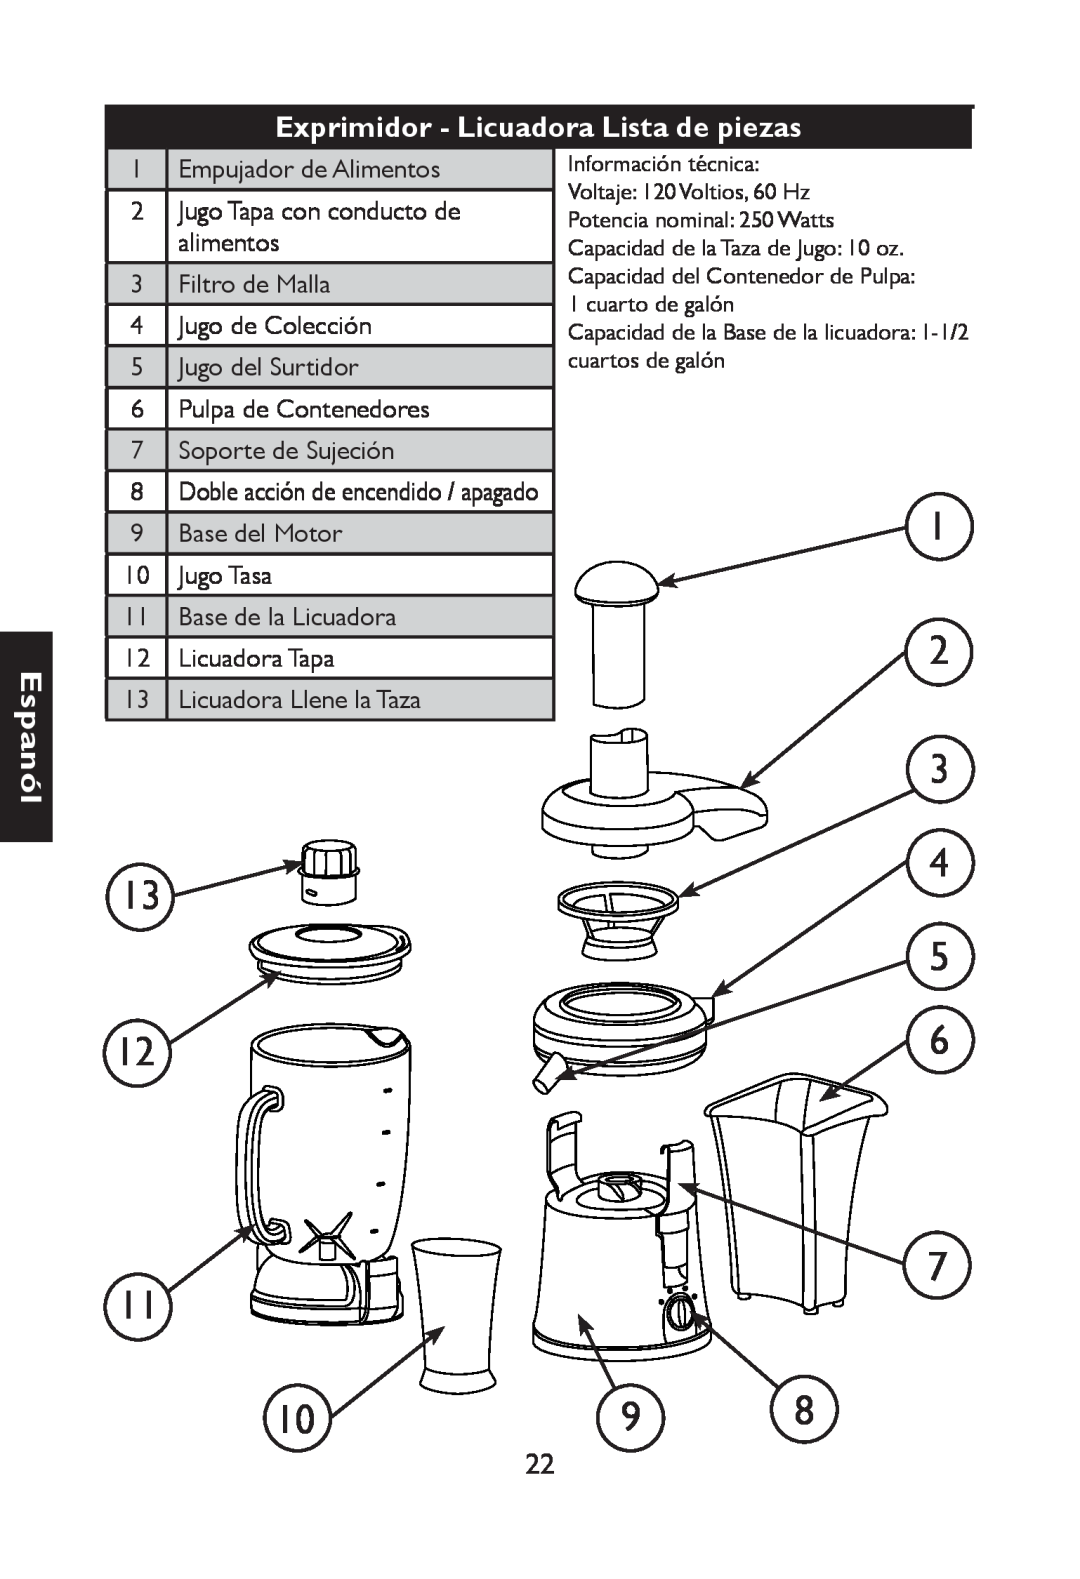 Nesco JB-50 manual Exprimidor - Licuadora Lista de piezas 